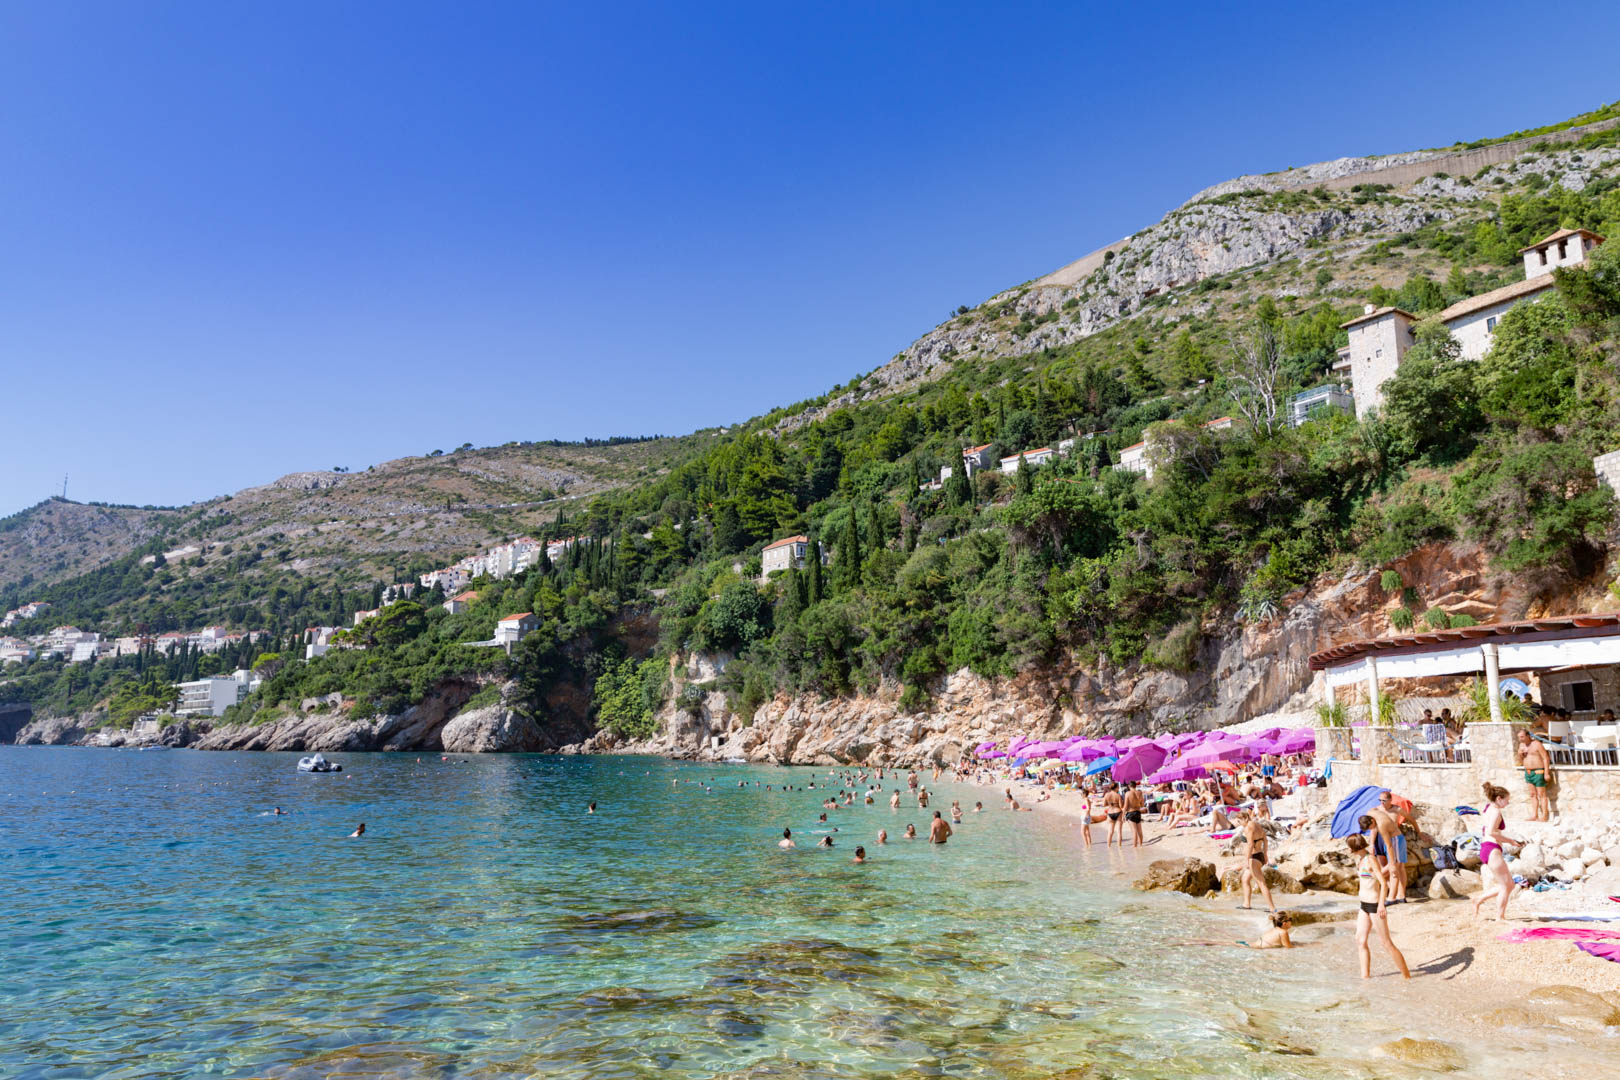 Best Dubrovnik Beaches - Dubrovnik Beaches - Best Beaches in Dubrovnik - Dubrovnik Beaches Guide - Best Beaches in Dubrovnik as recommended by a local - Sveti Jakov Beach - St Jacob Beach